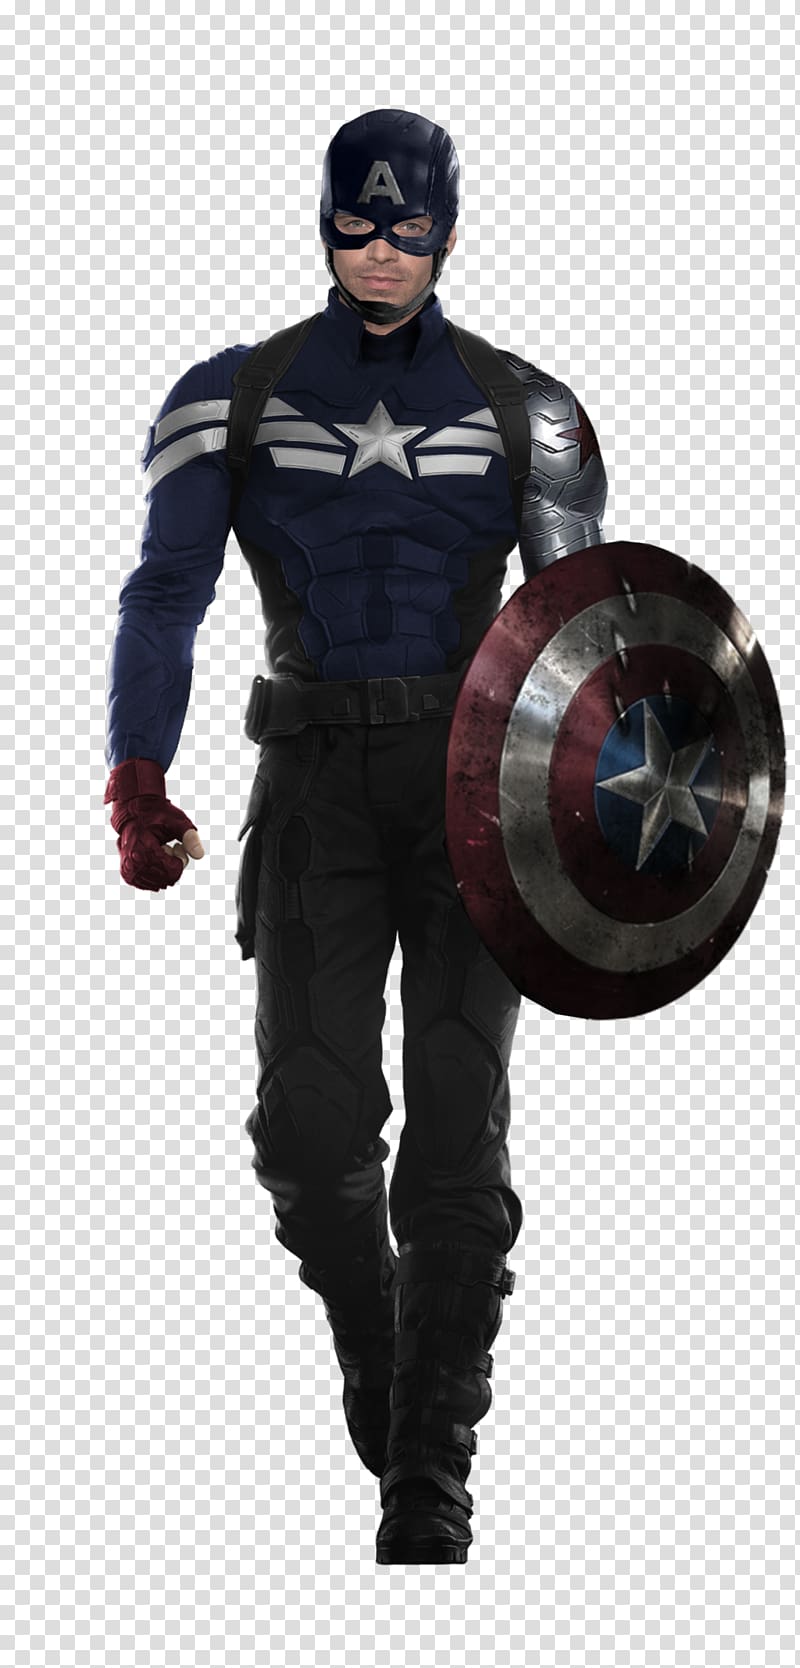 Captain America Black Widow Wanda Maximoff Bucky Barnes Costume, Captain America transparent background PNG clipart